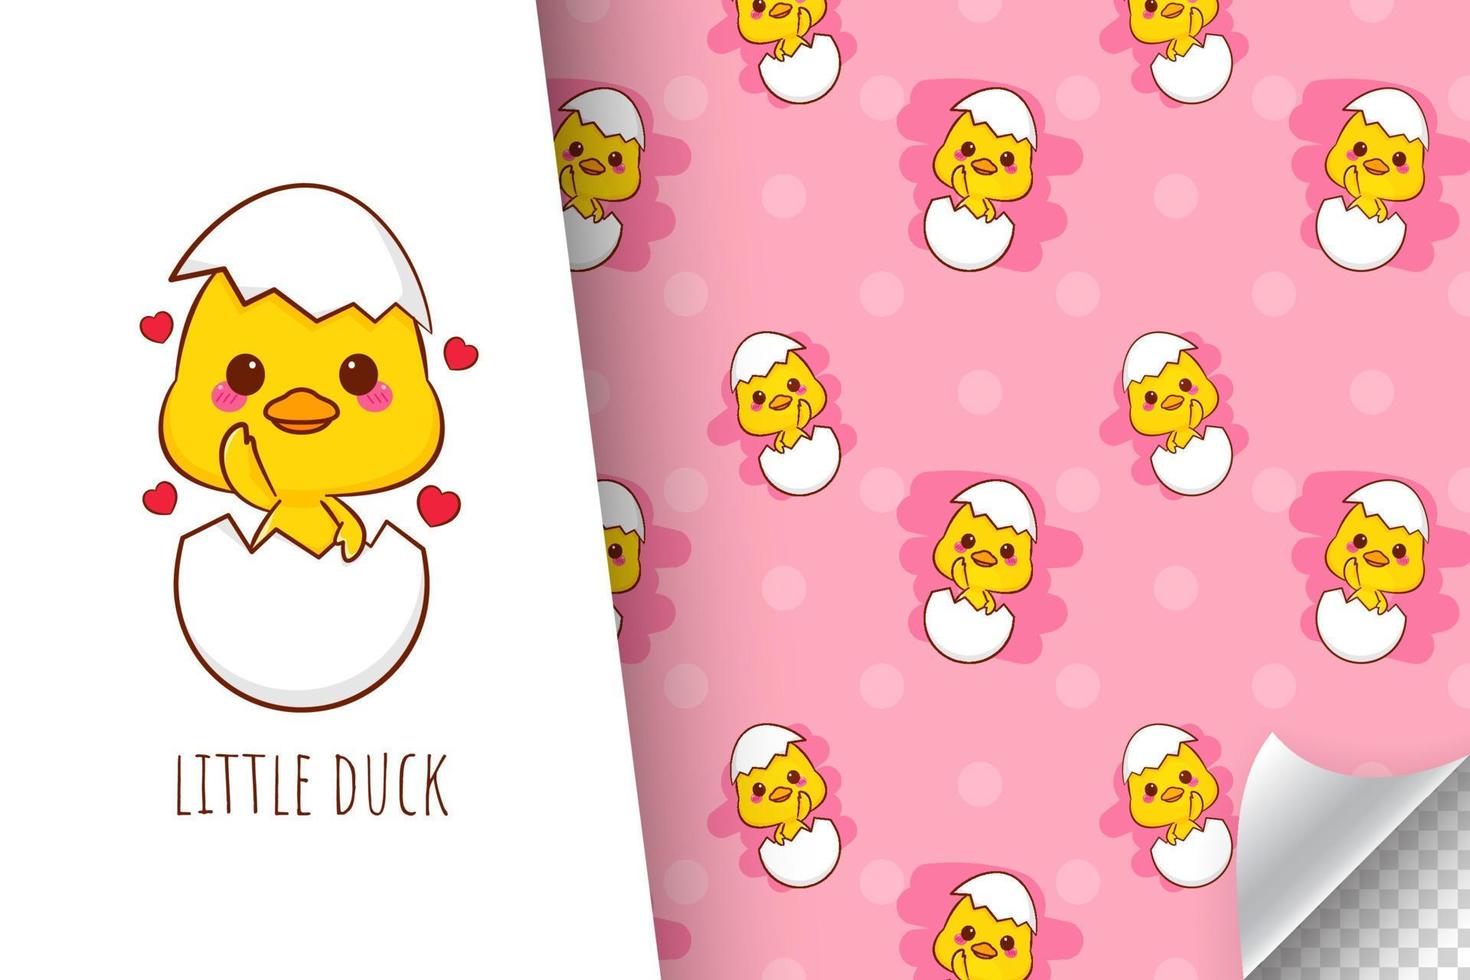 Cute baby duck cartoon character seamless pattern illustration vector